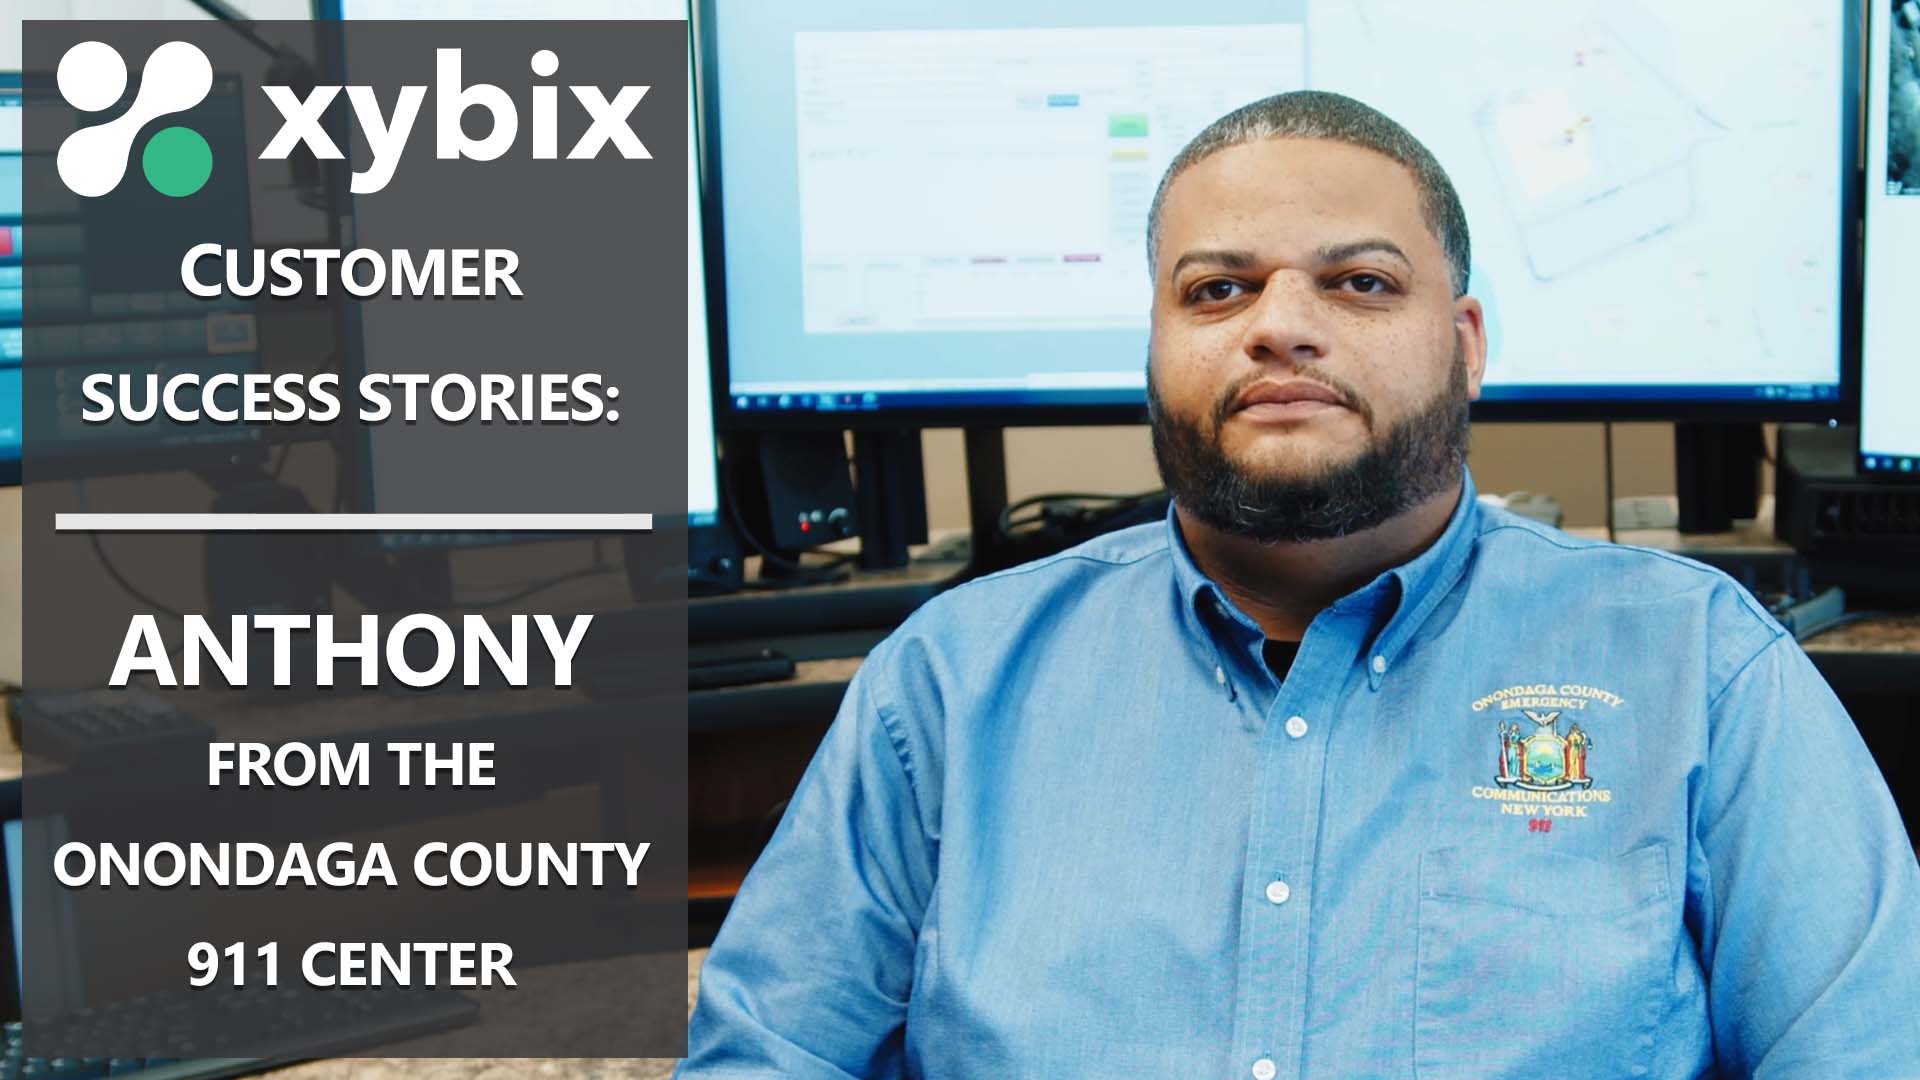 Xybix Testimonials - Anthony from the Onondaga County 911 Center in New York